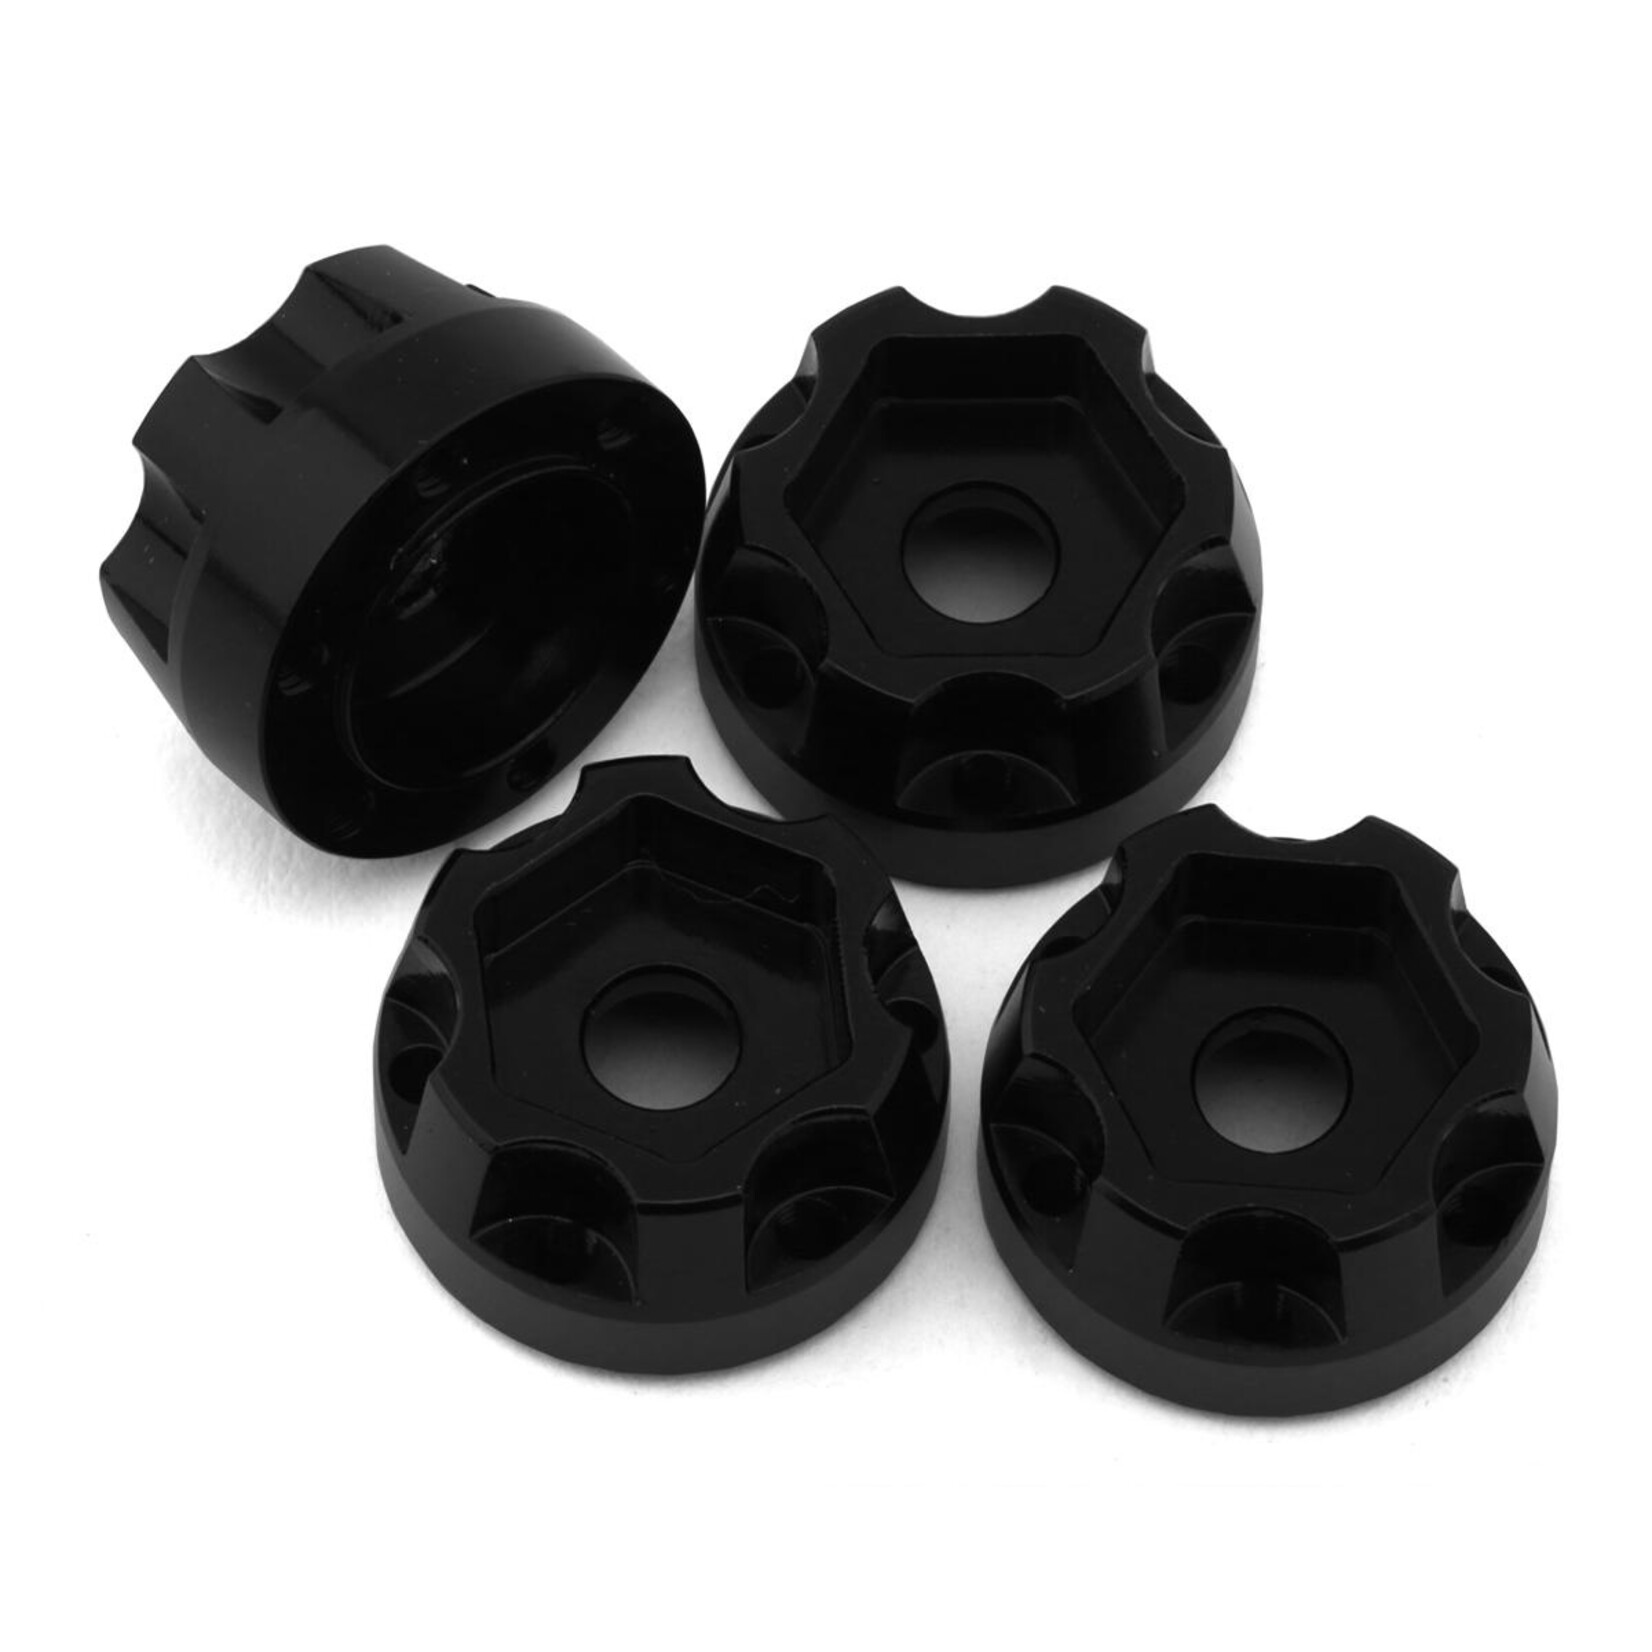 Treal Treal Hobby Type D 1.0" Concave 6-Spoke Beadlock Wheels (Black) (4) #X00396G9MV